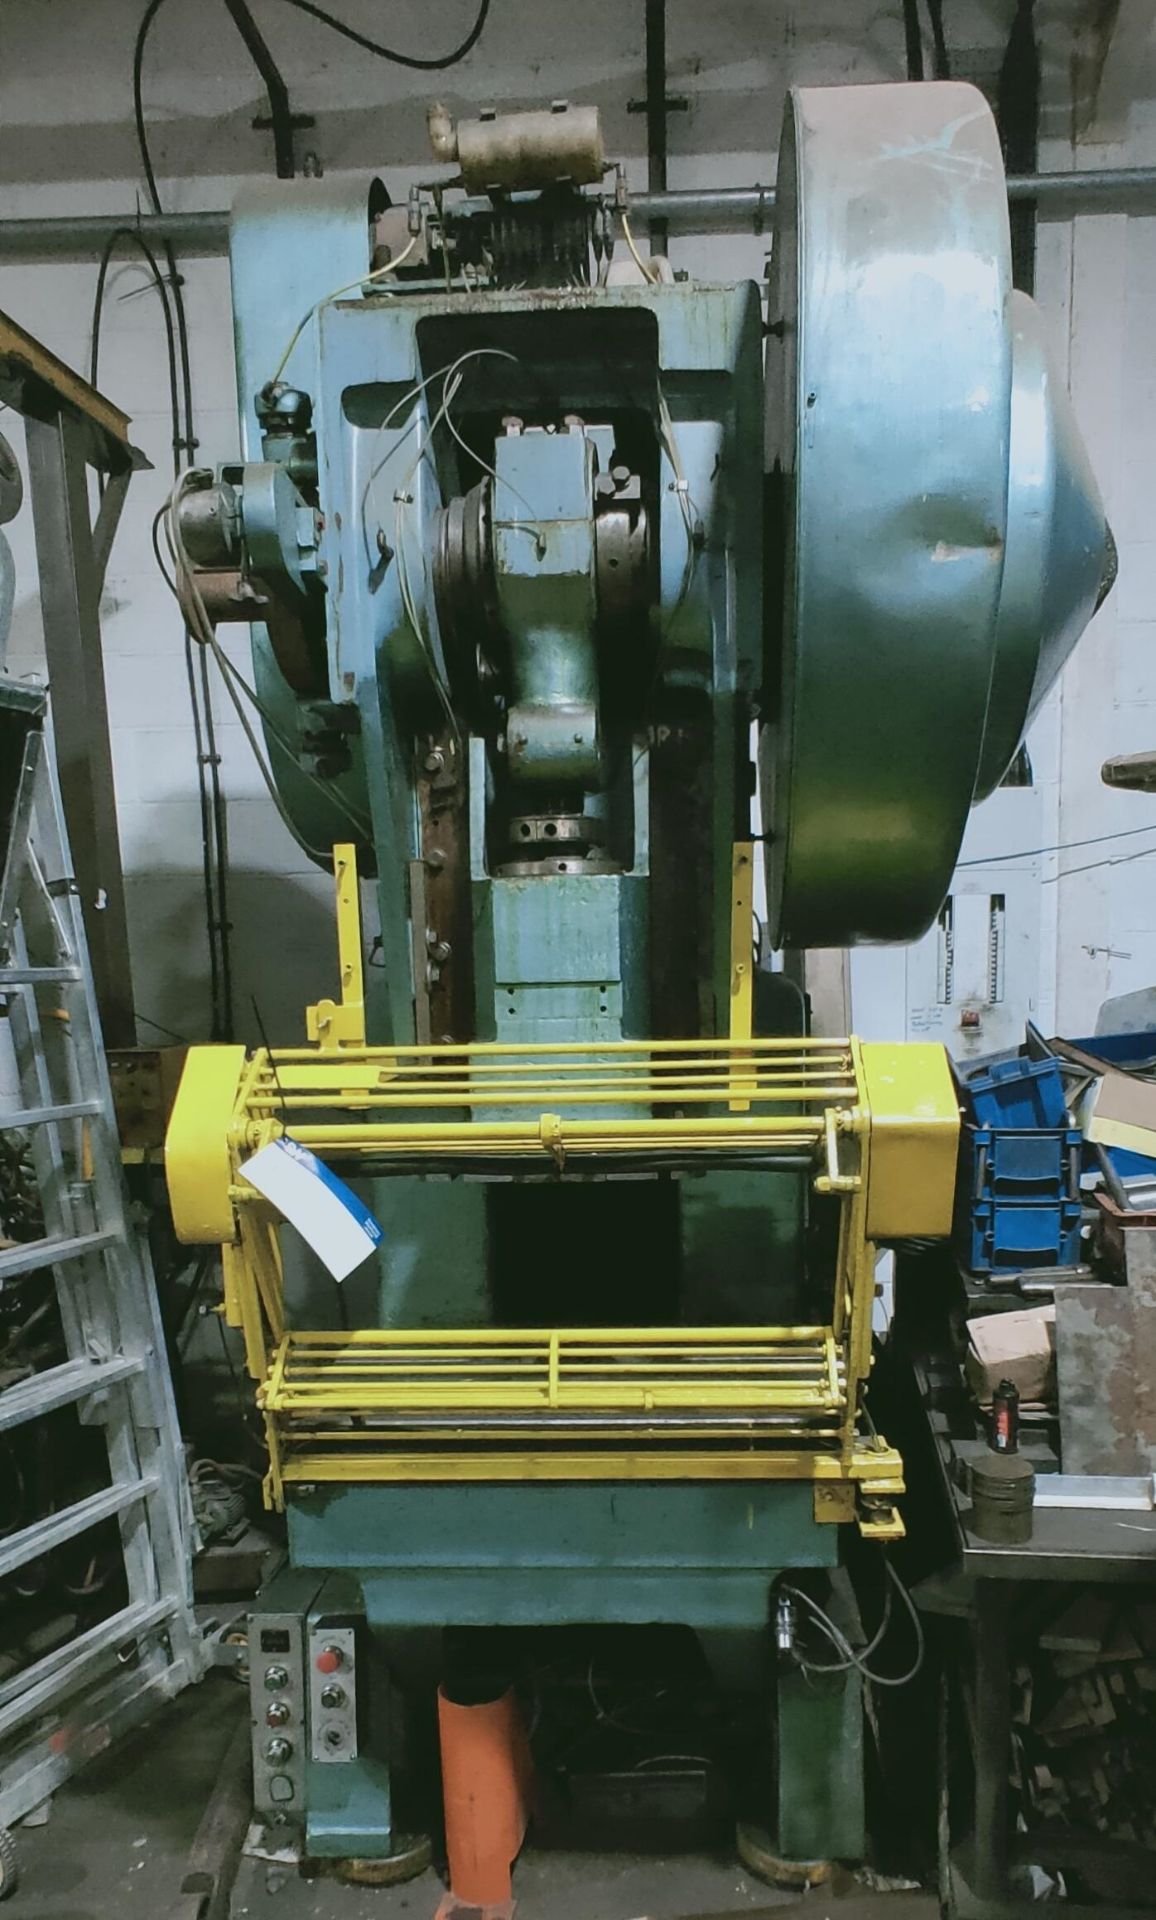 HME/ Cincinnati Milacron 75 ton Press, serial no. 16790, approx. 3.25m x 1.55m x 1.5m (it is the